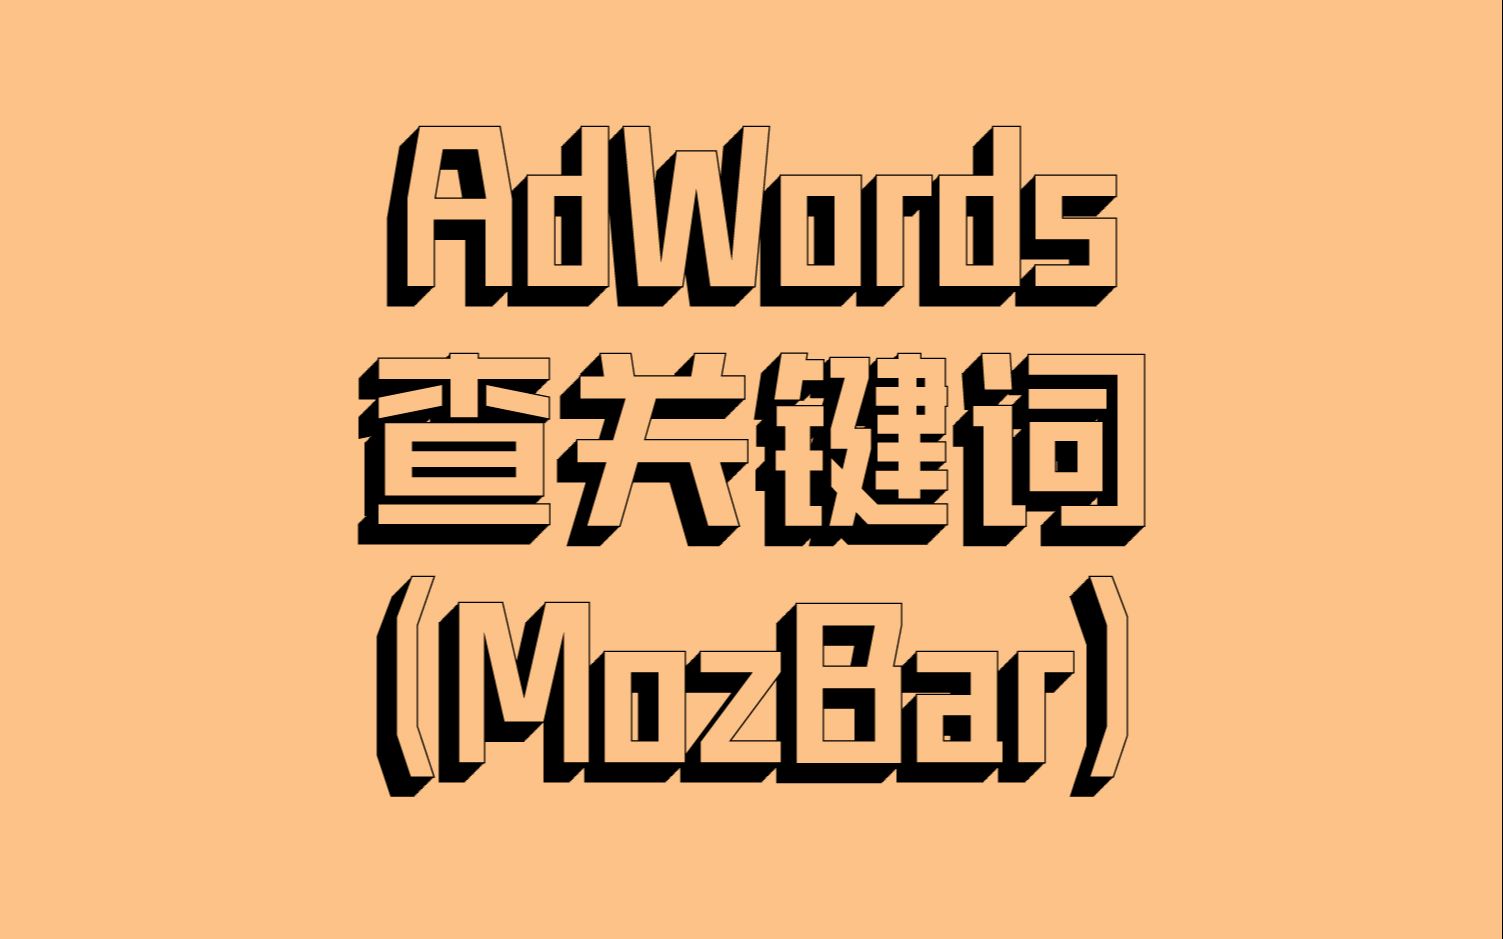 🔼 SEO | 使用 AdWords 查询关键词 + MozBar